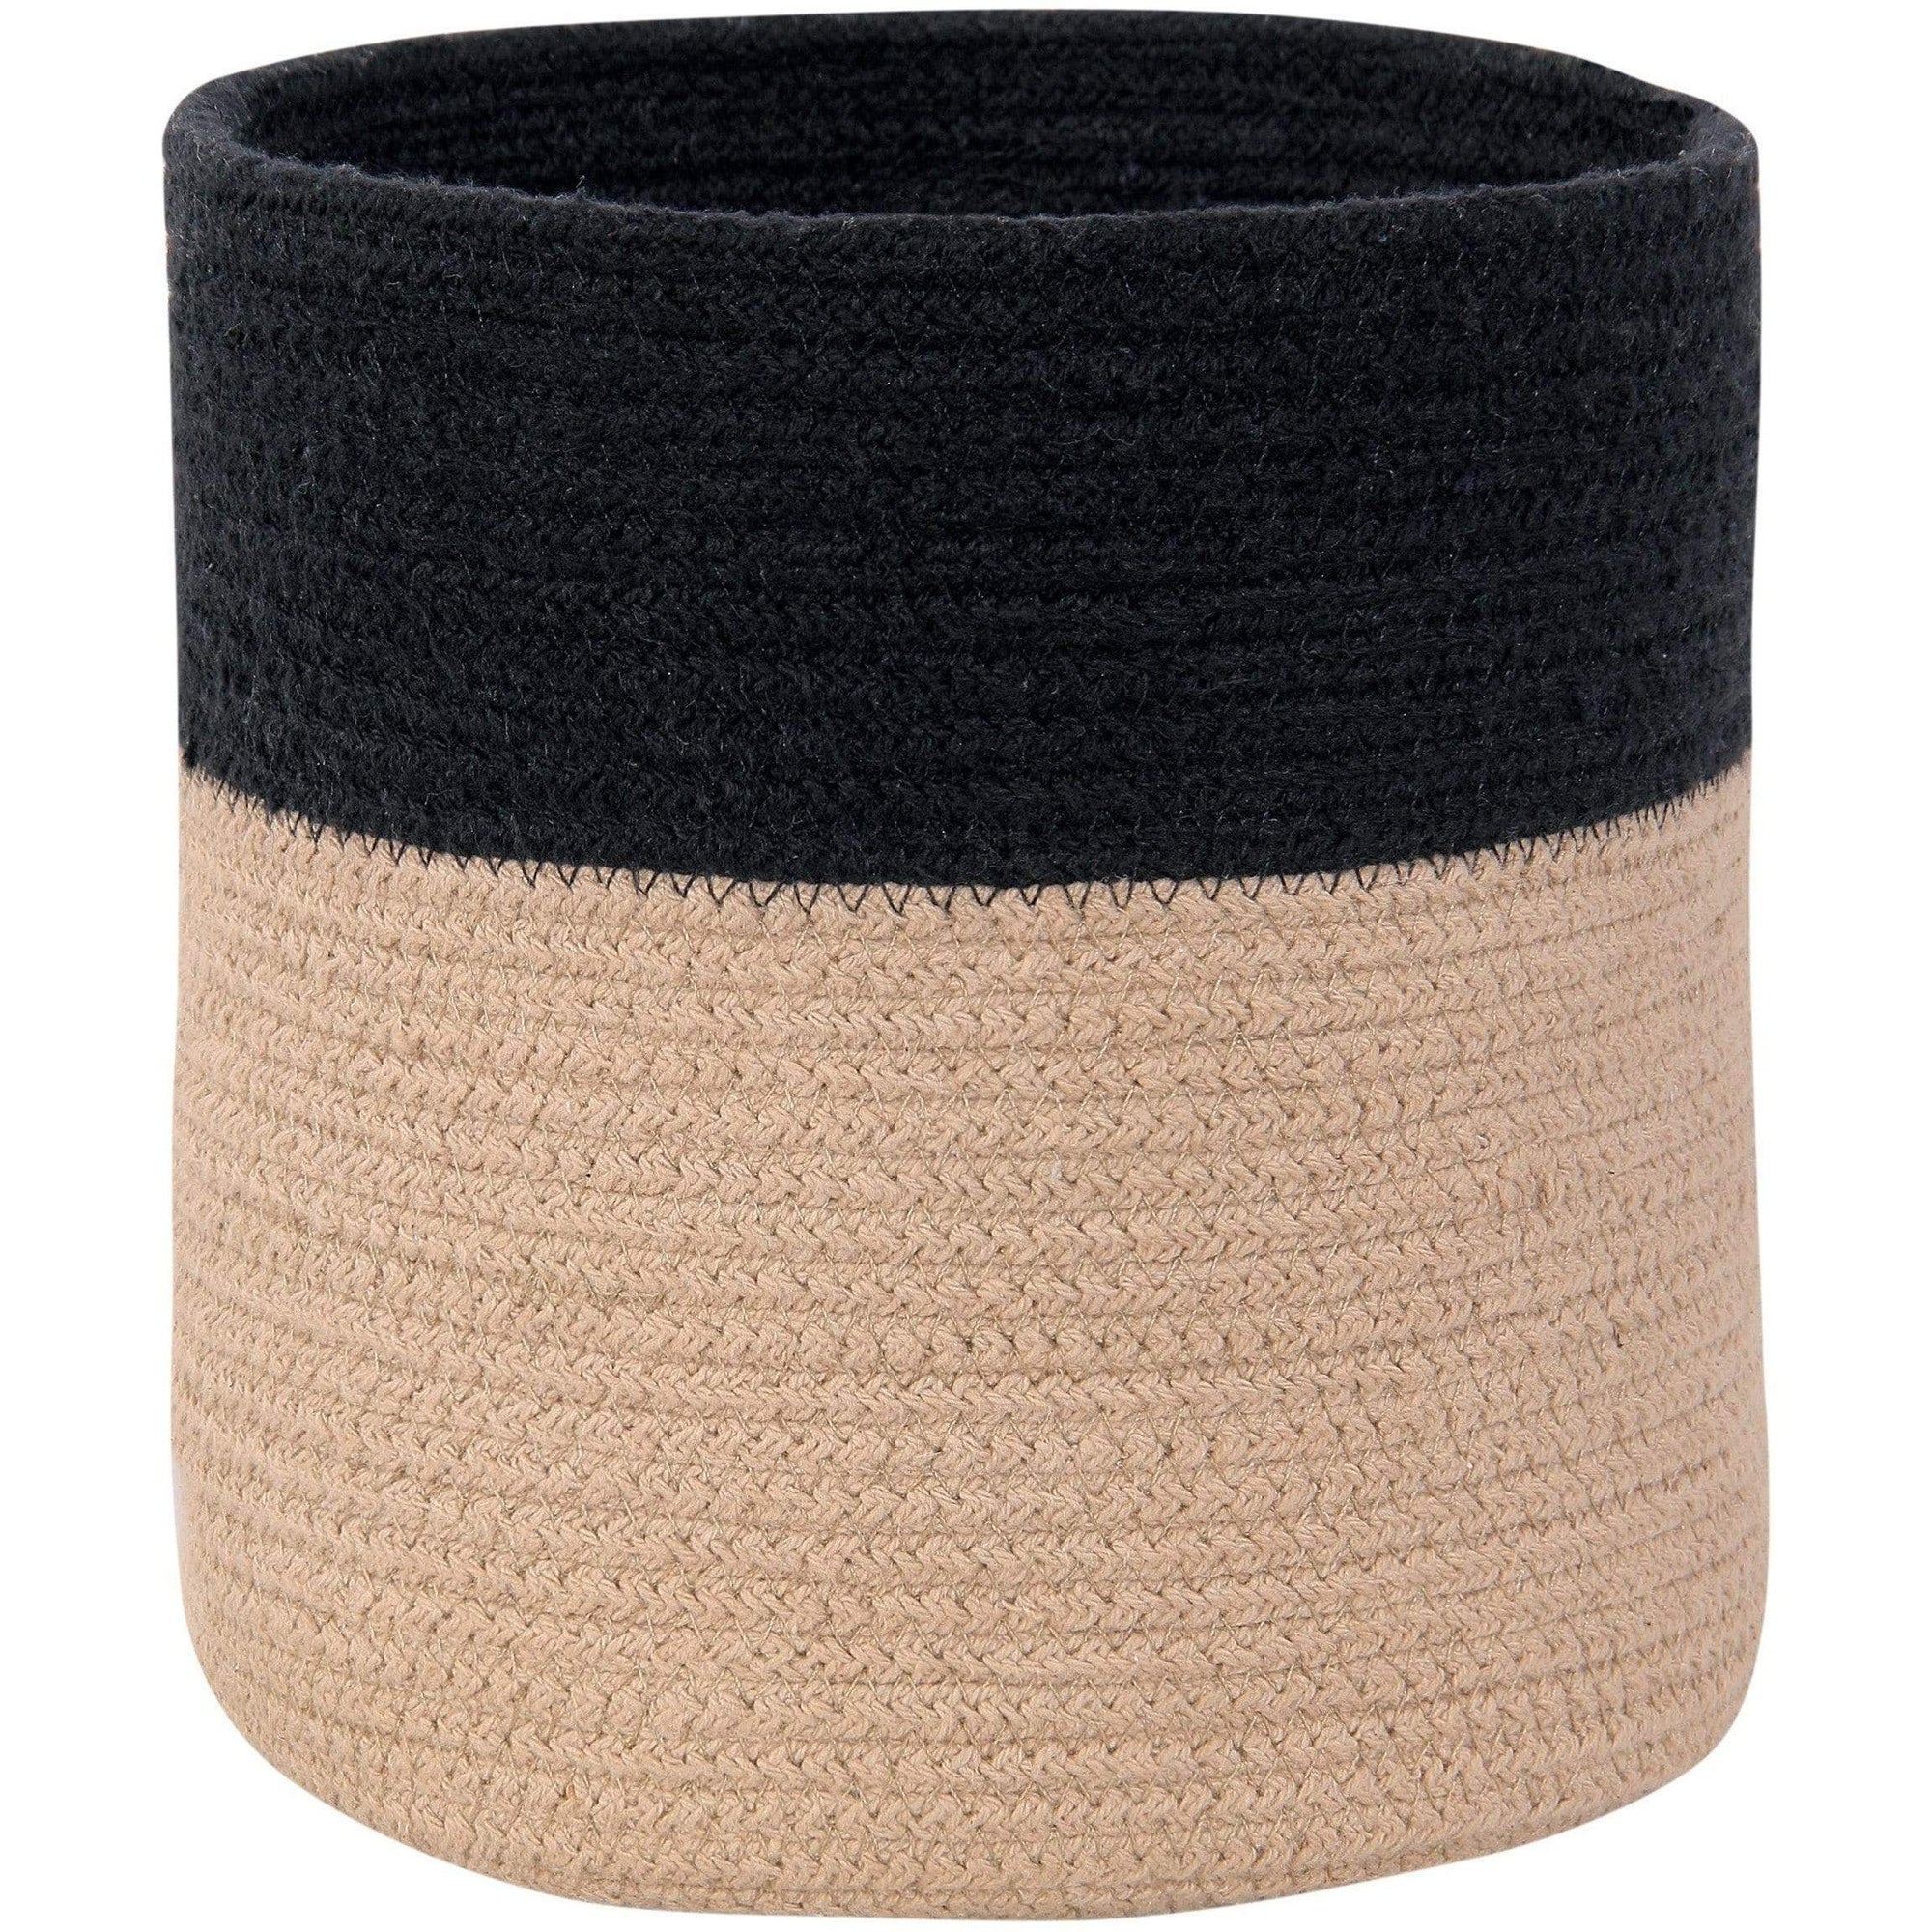 Rugs by Roo | Lorena Canals Dual Black Linen Basket-BSK-BLACK-LIN